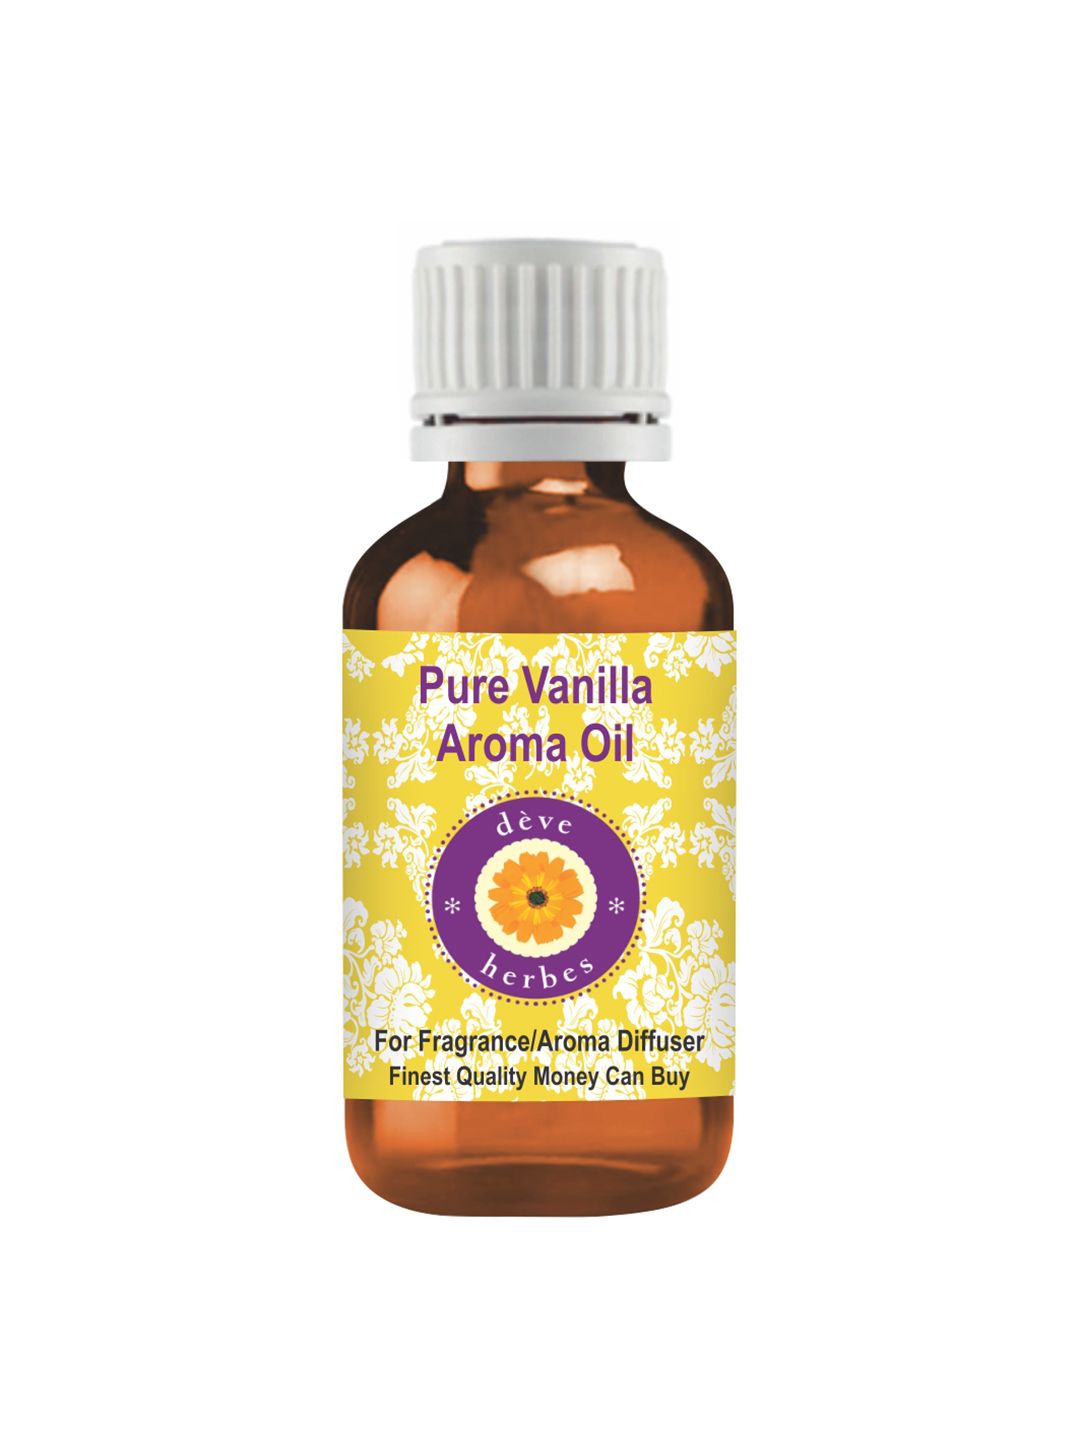 Deve Herbes Yellow Vanilla Aroma Oil 30ml Price in India